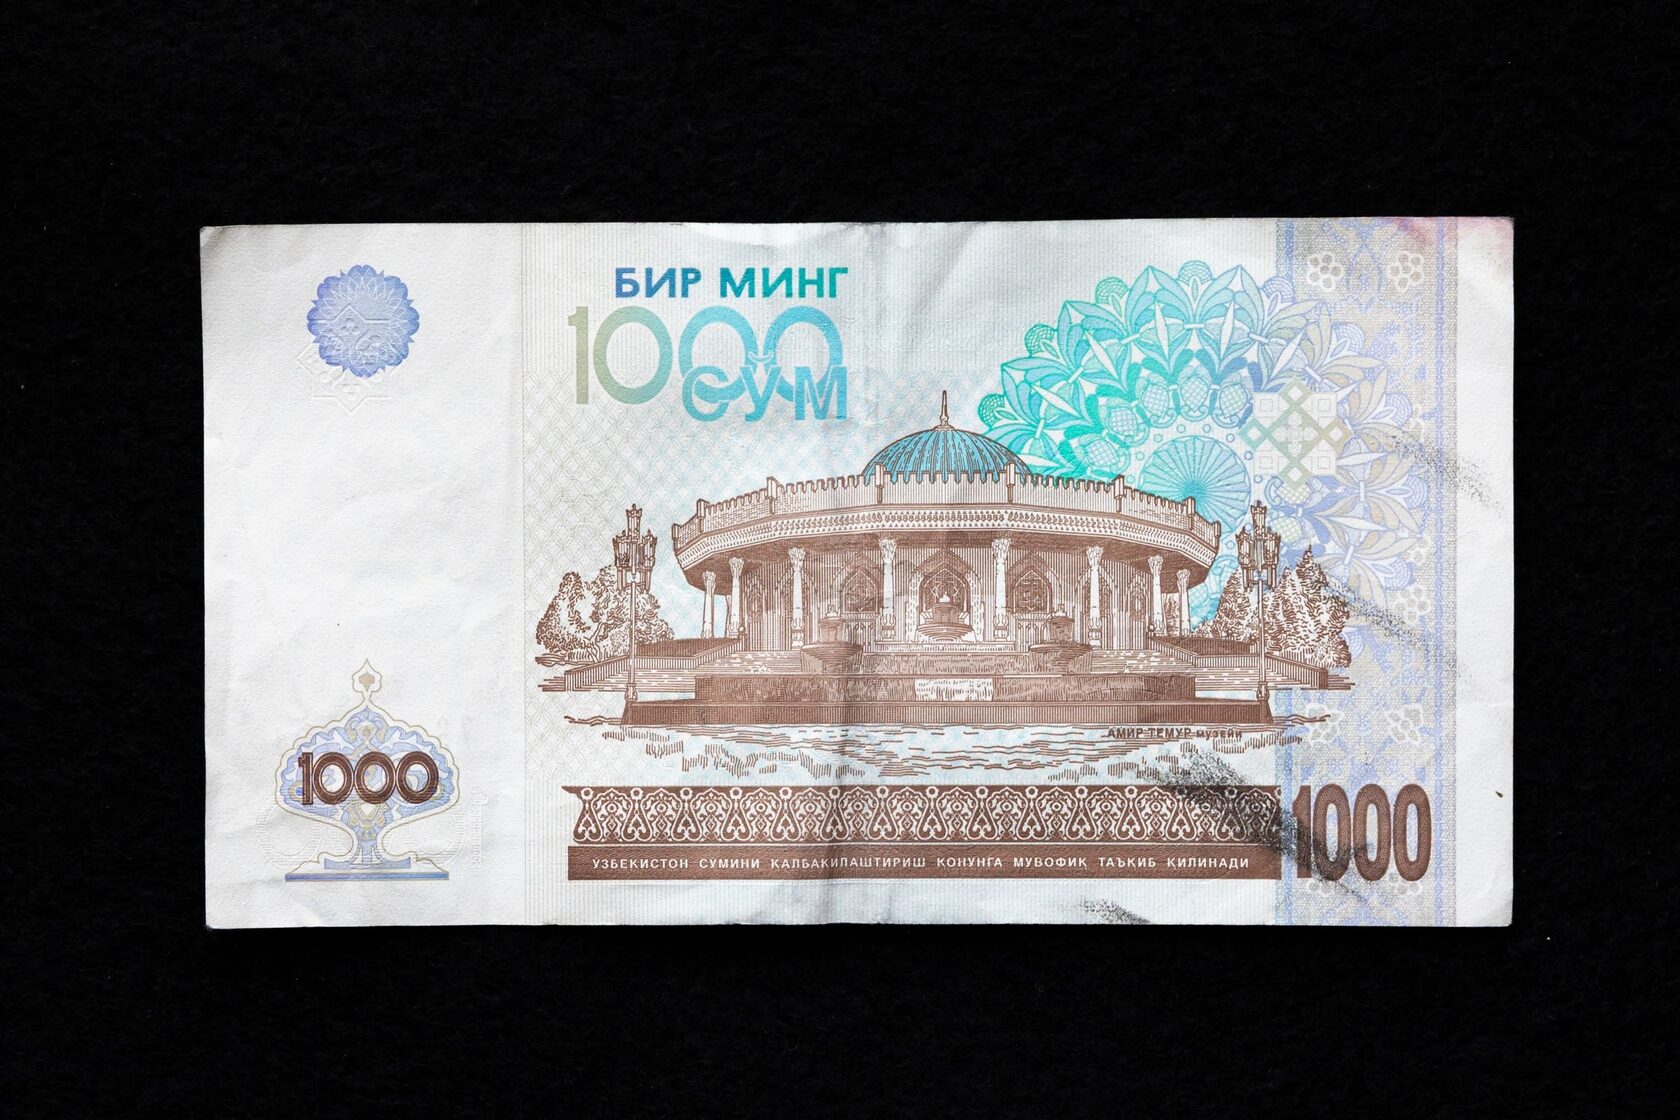 Узбекистан валюта сум. 100 Ming so'Mlik купюра. Узбекские деньги. Сум Узбекистан. Валюта Узбекистана.